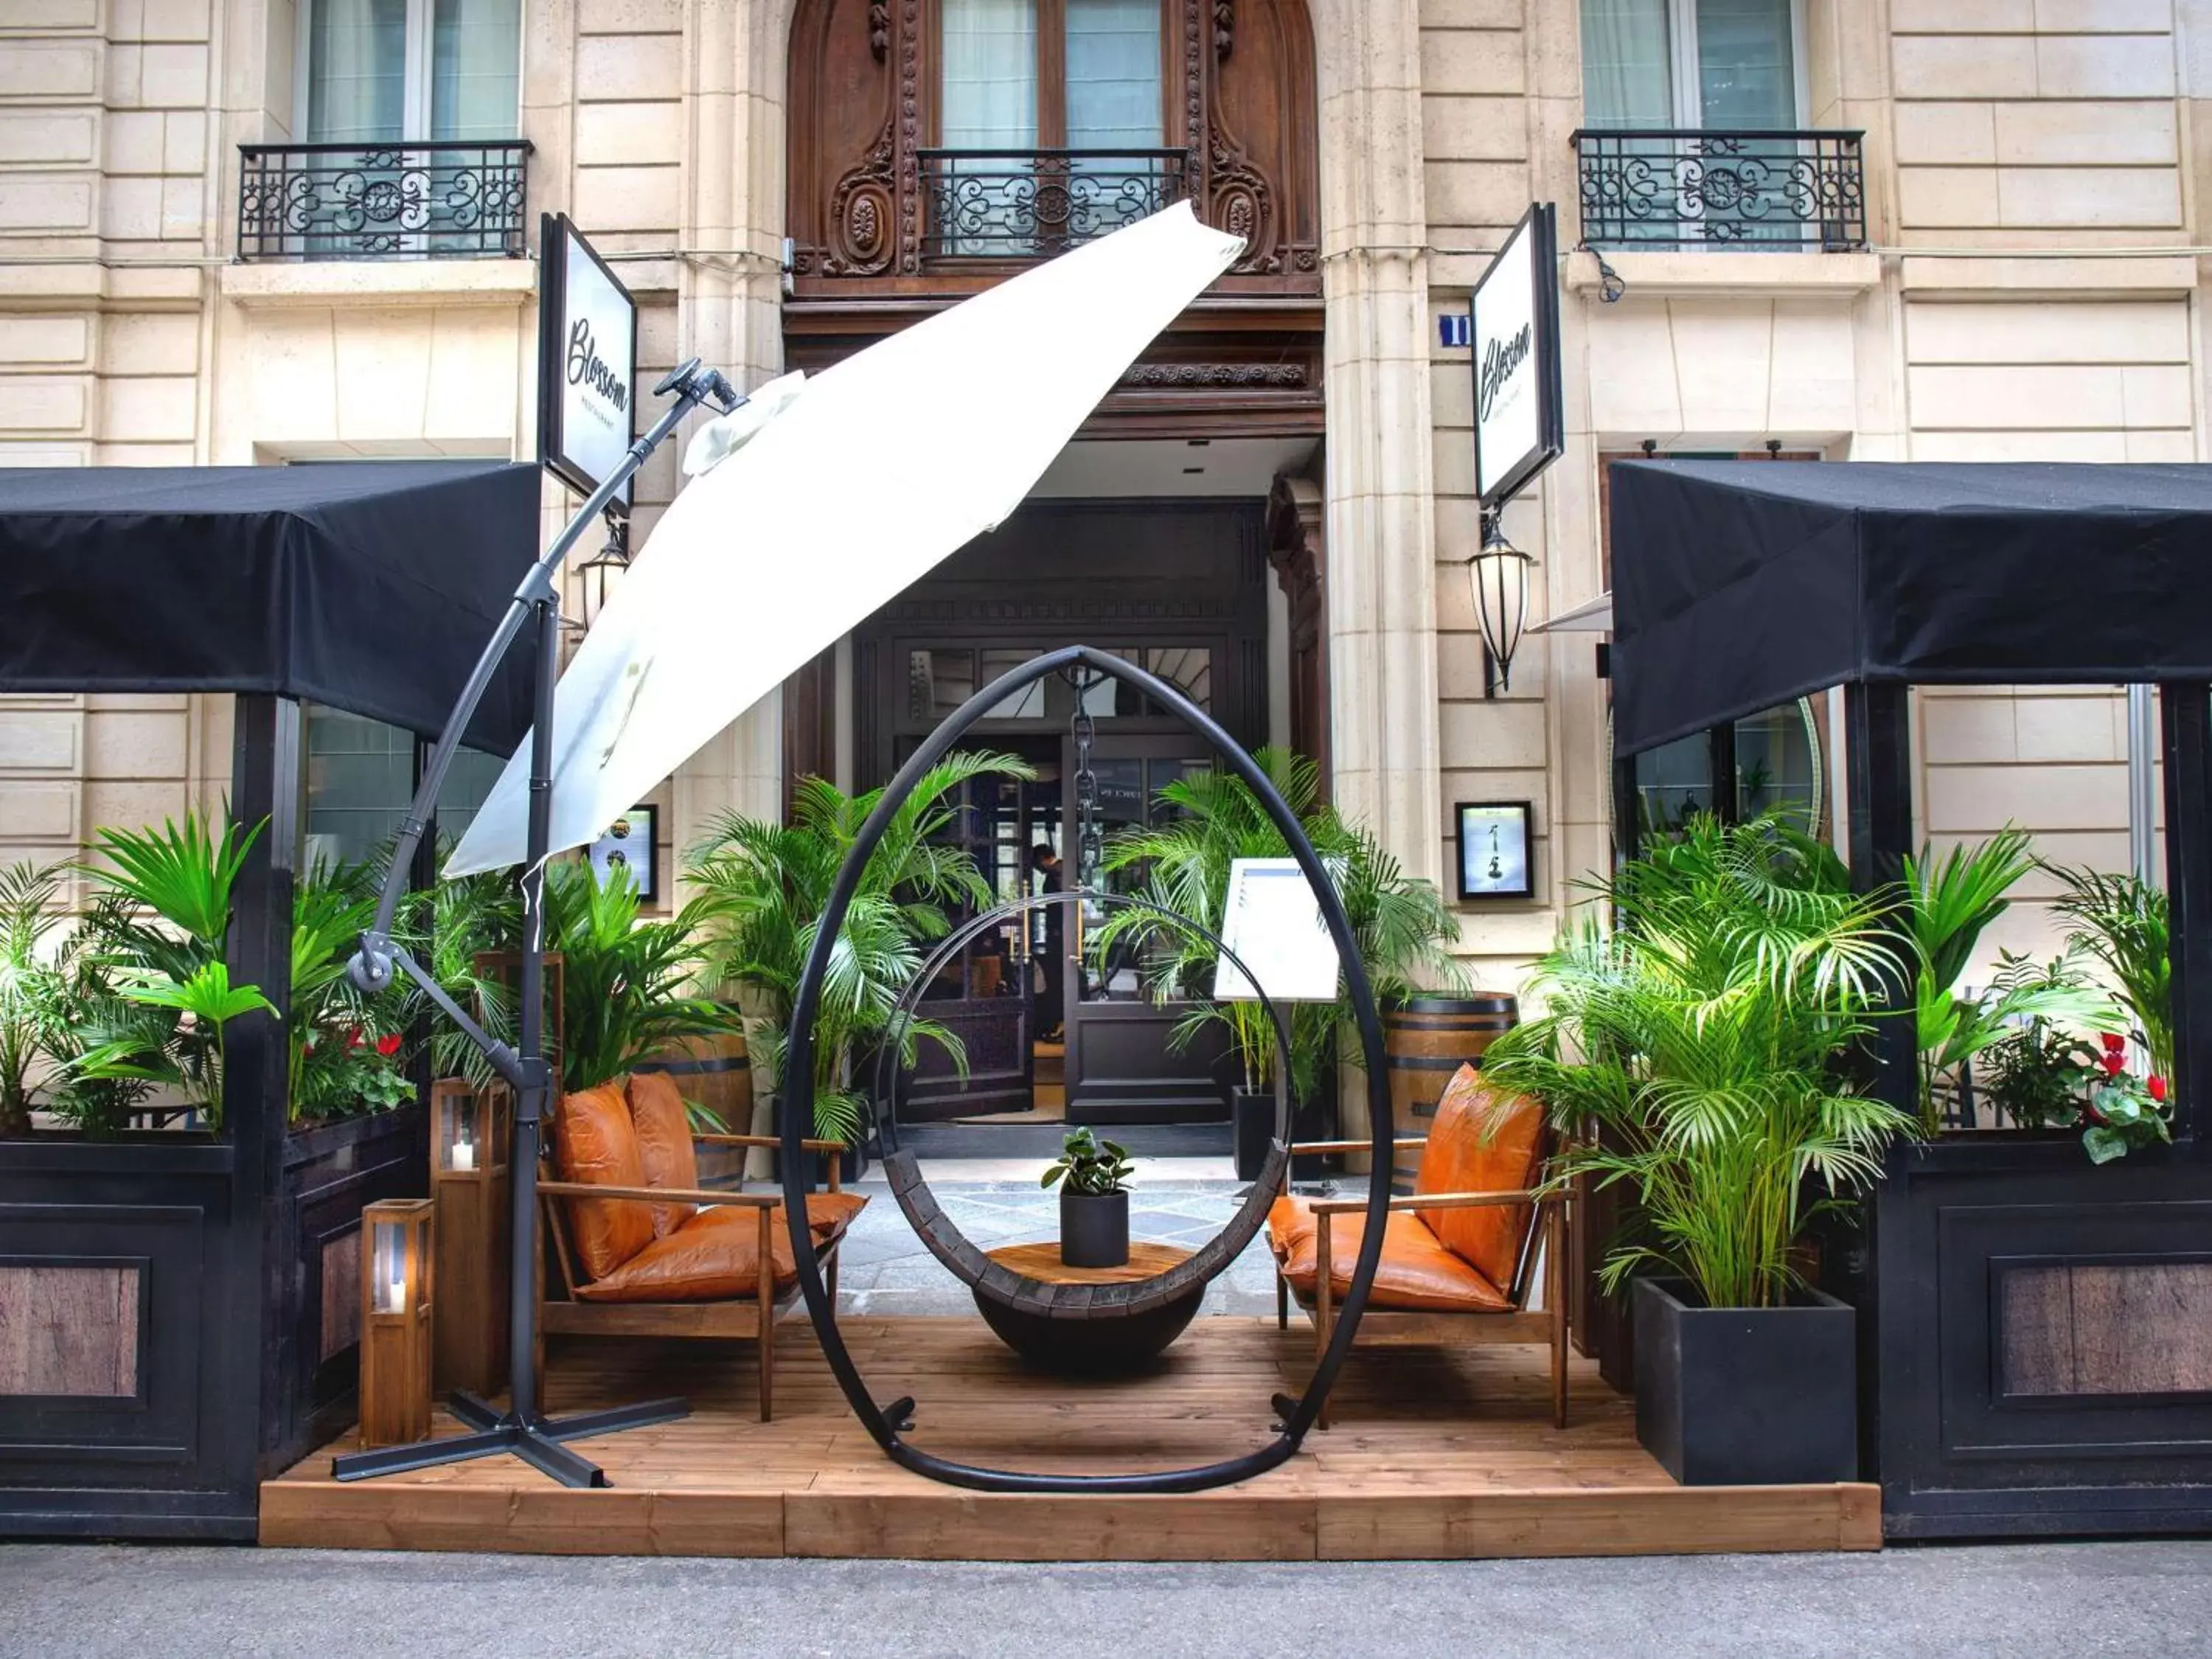 Restaurant/places to eat in Sofitel Paris Le Faubourg